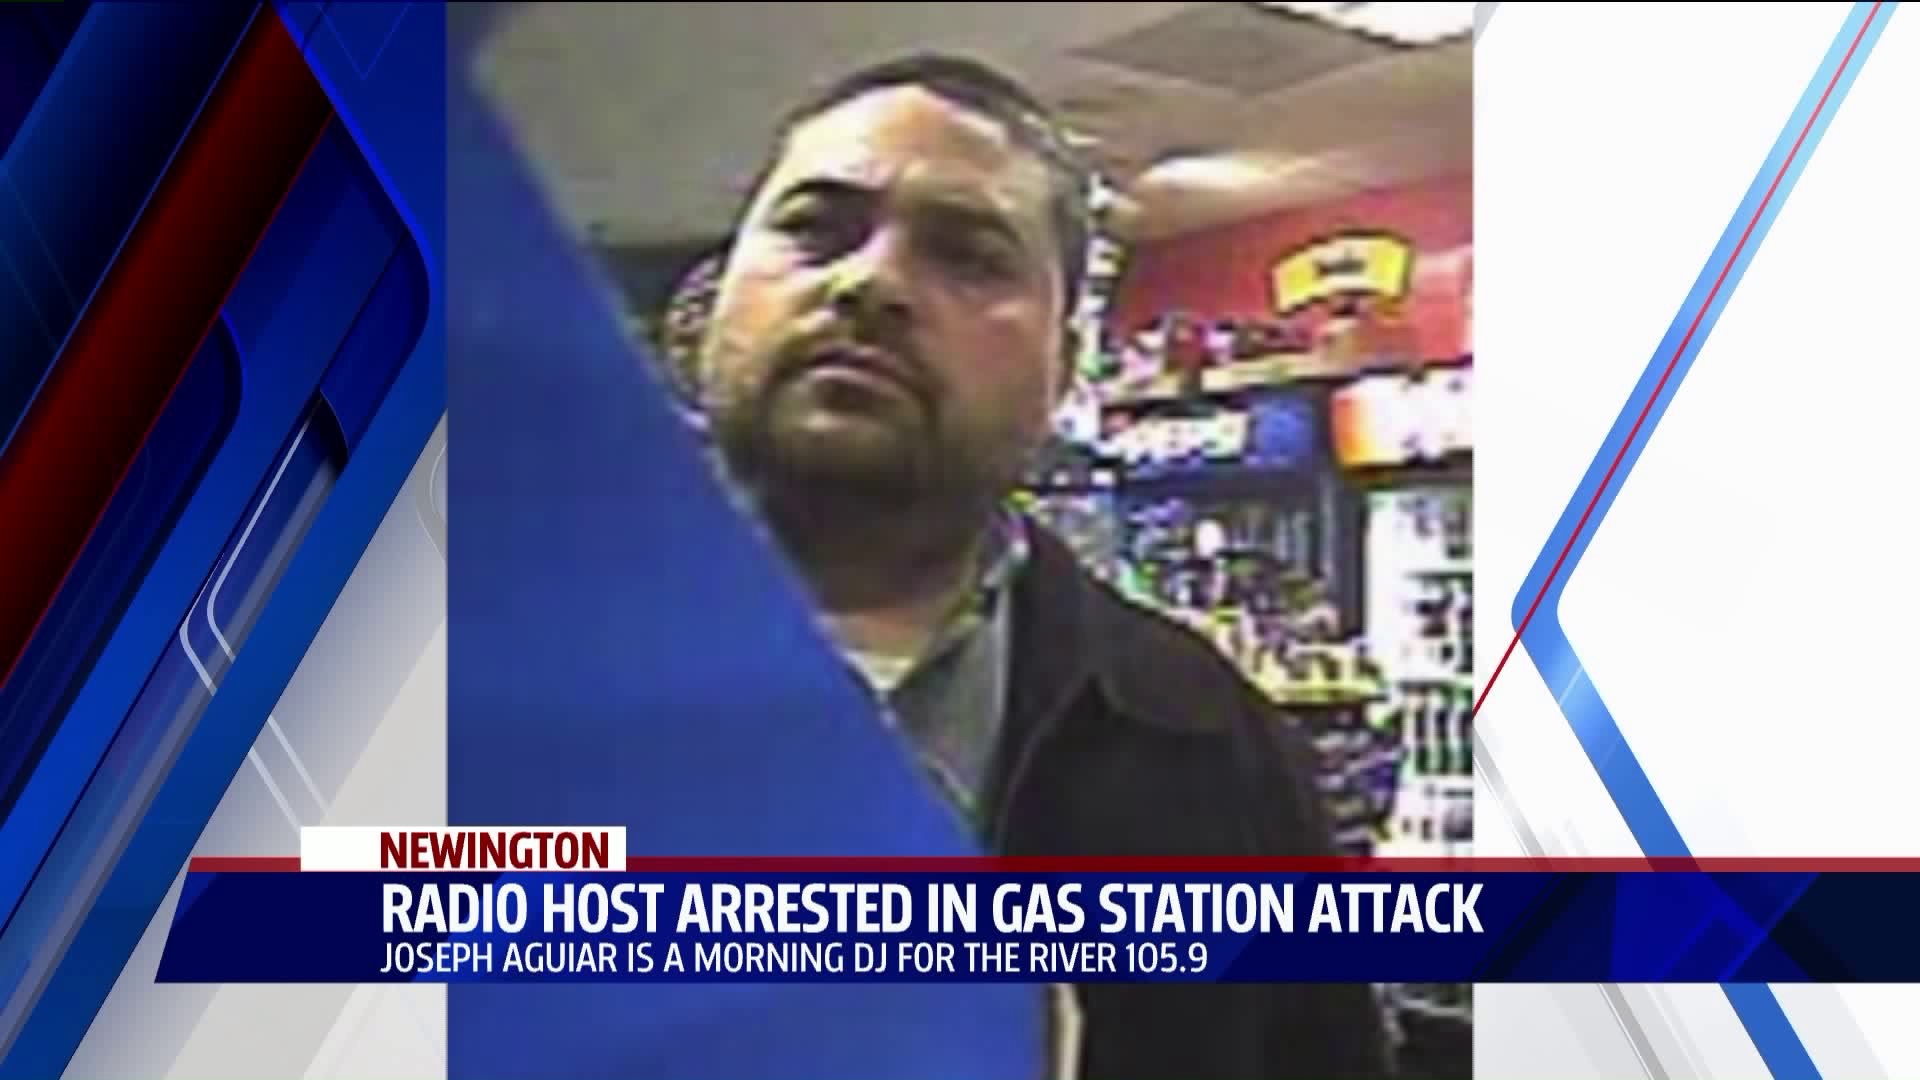 DJ arrested for Newington gas station attack